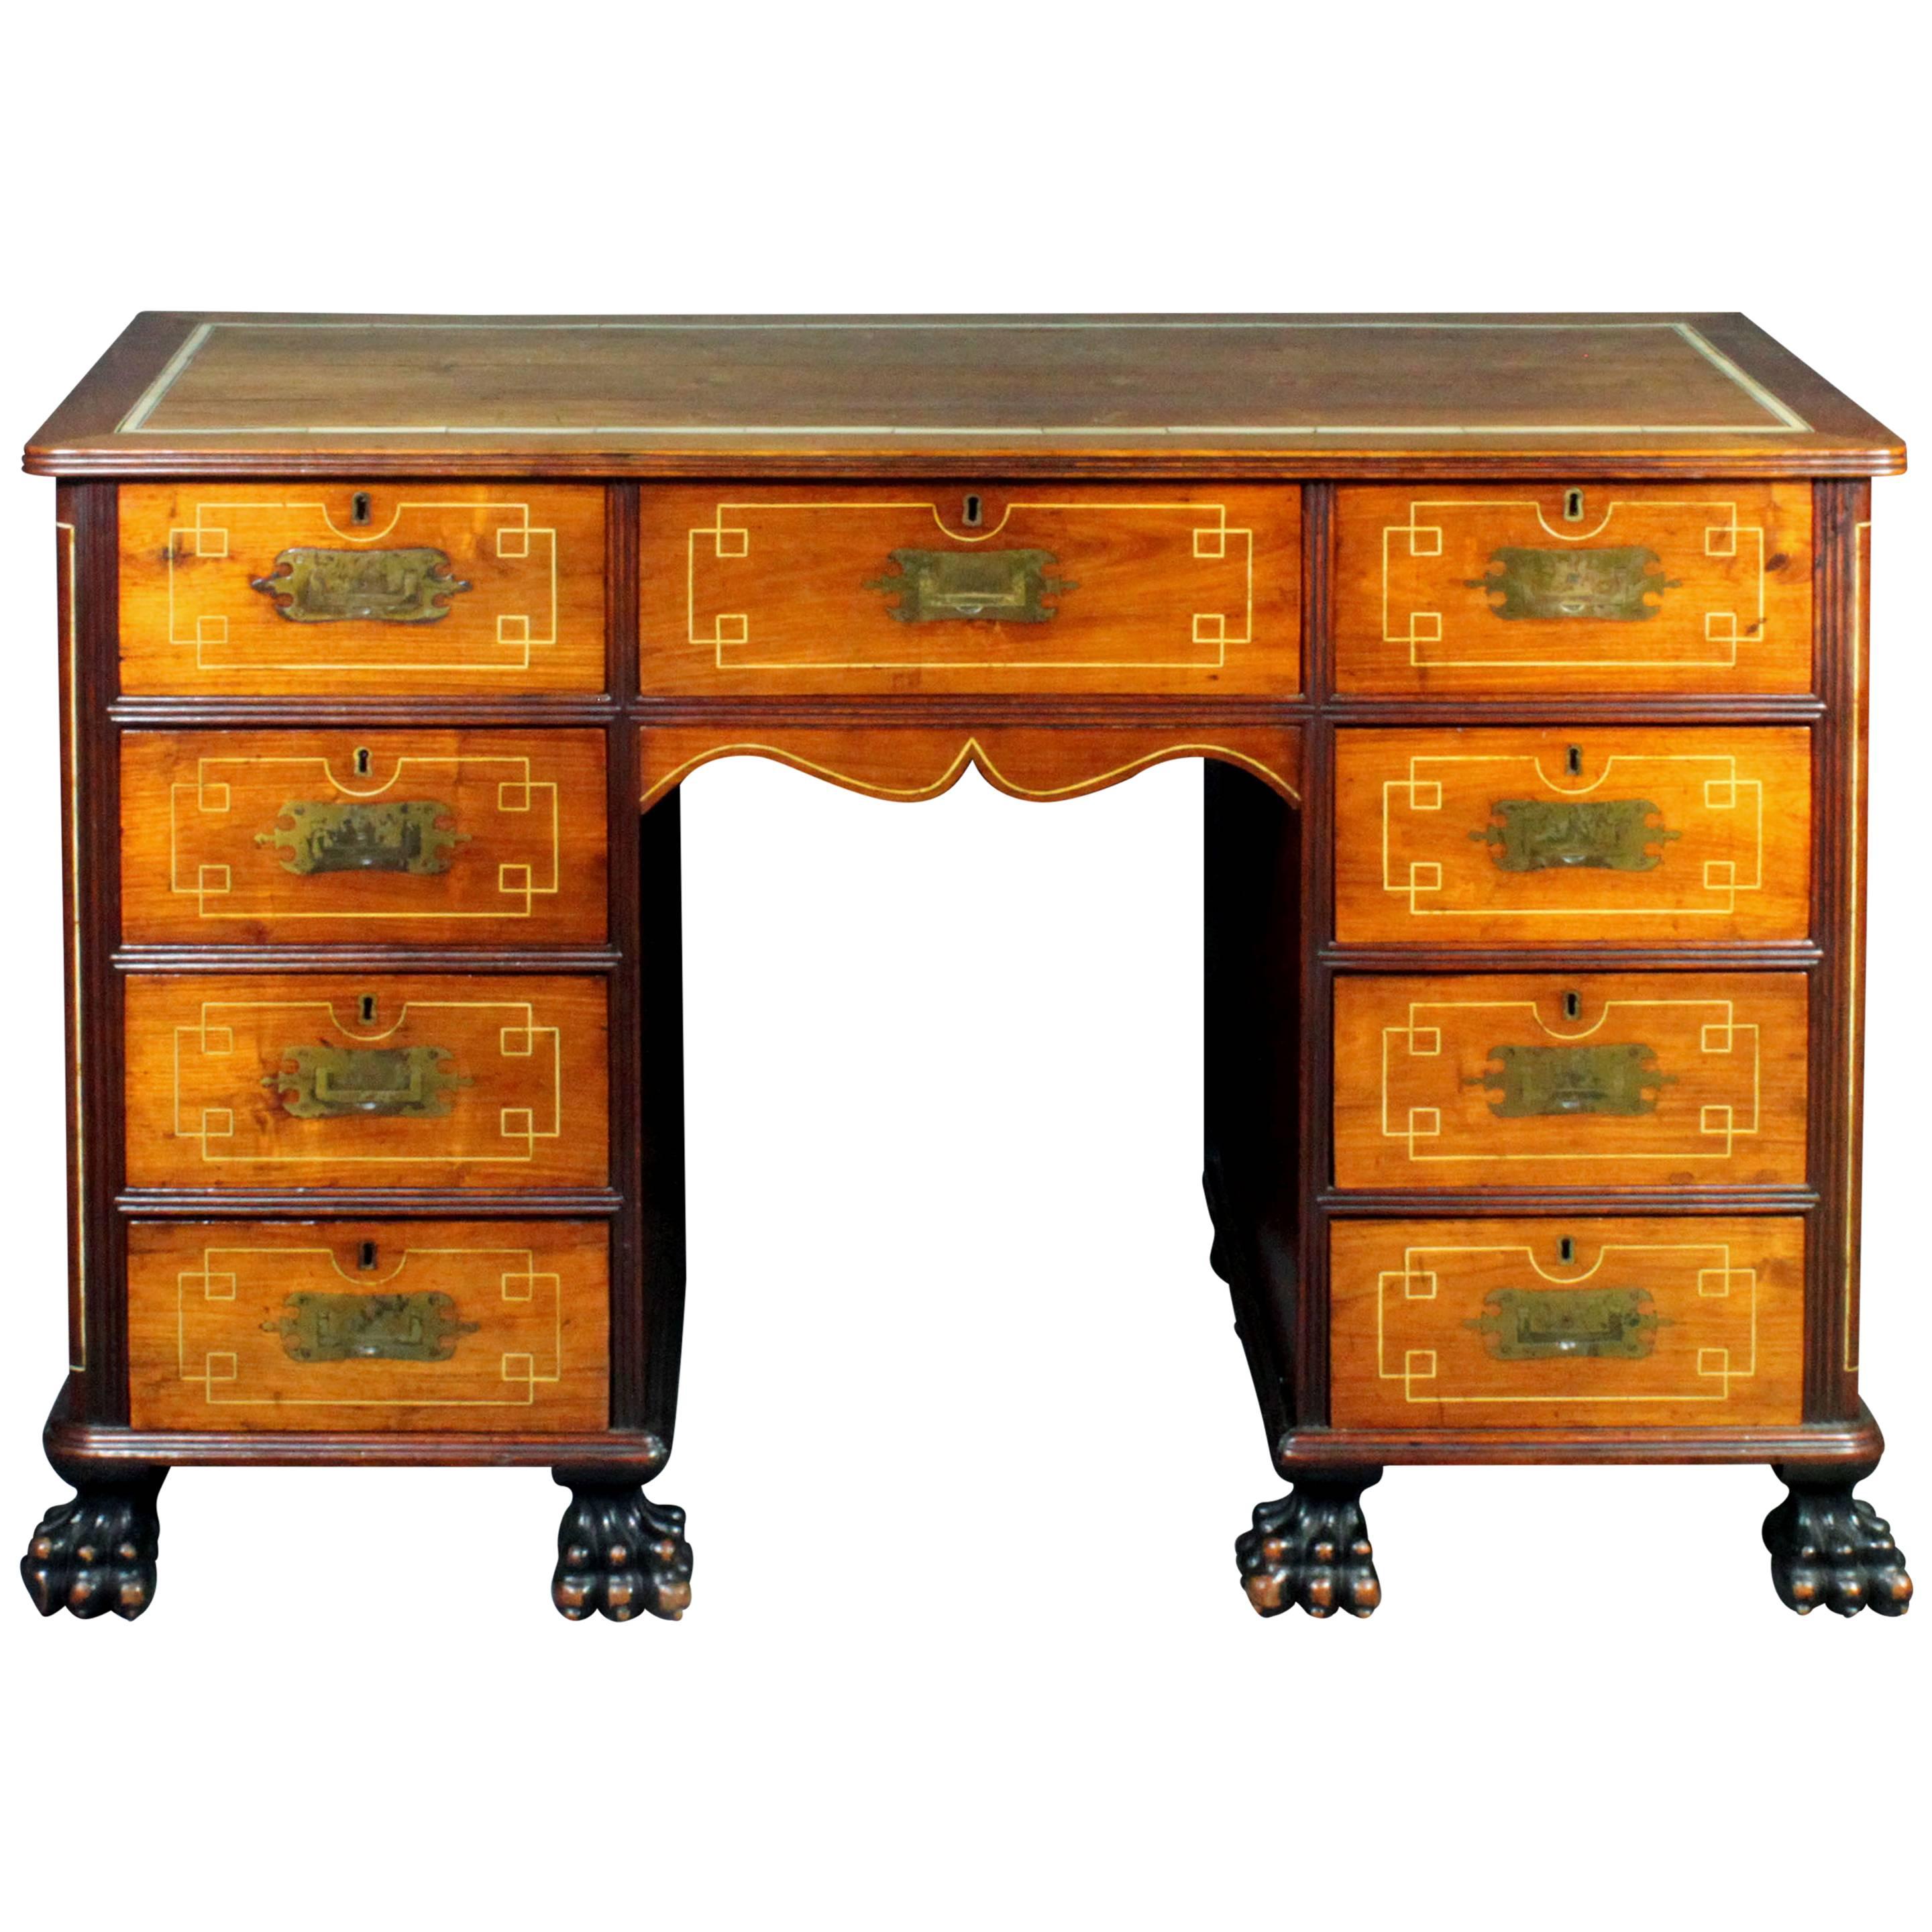 Antique China Trade Desk For Sale